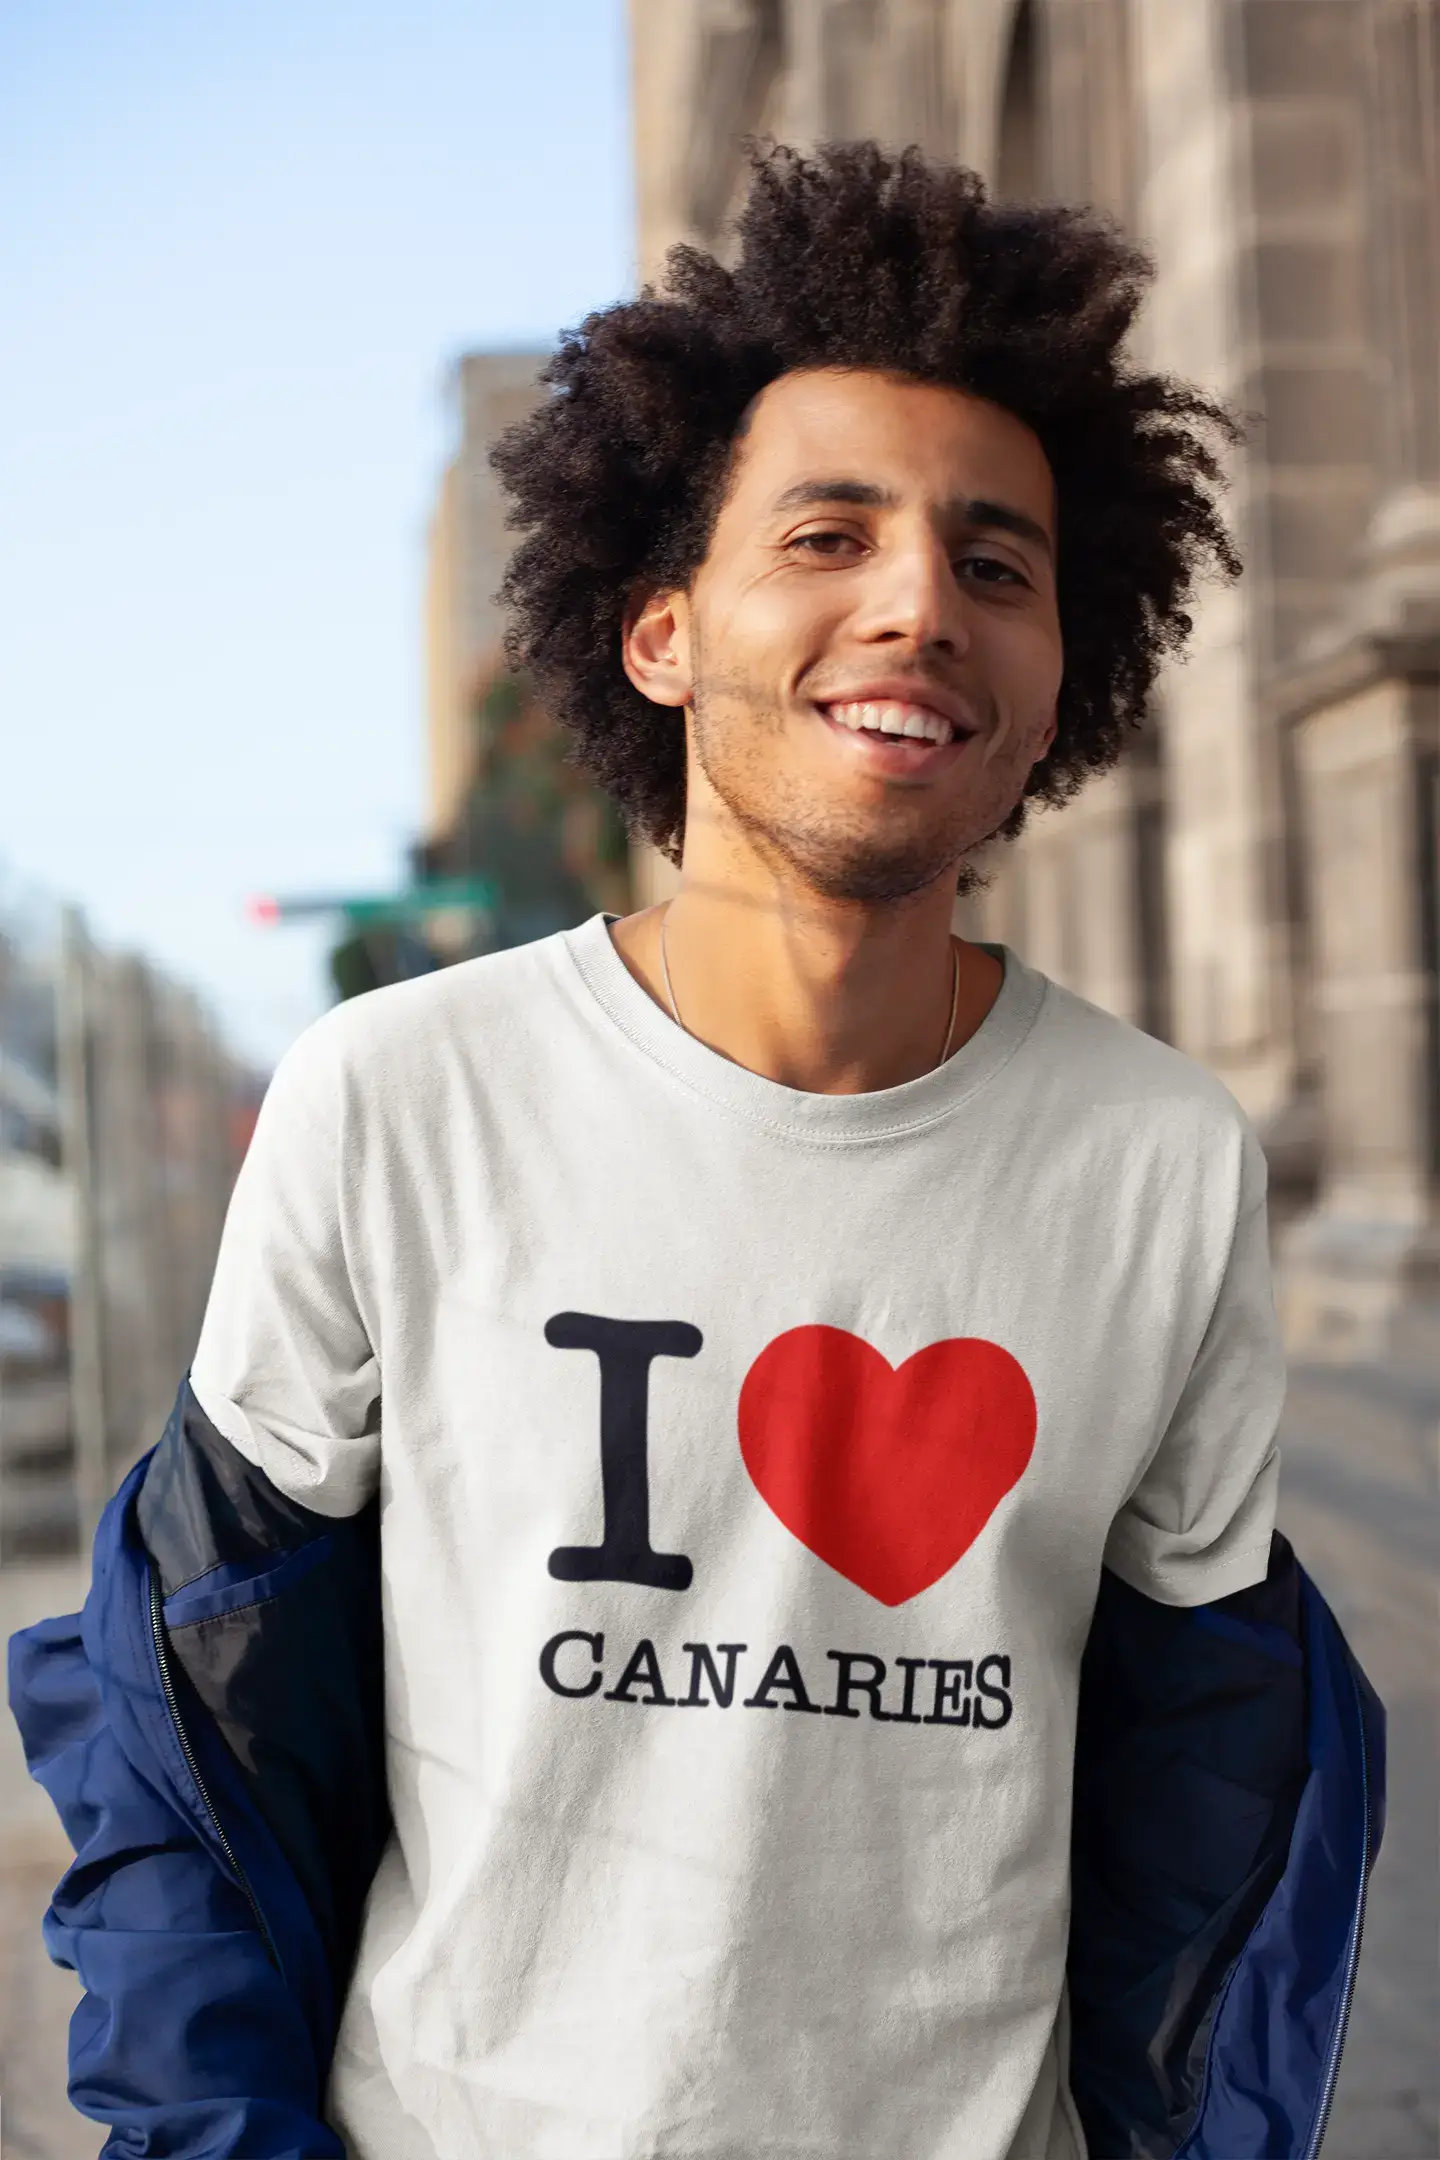 CANARIES, Men's Short Sleeve Round Neck T-shirt